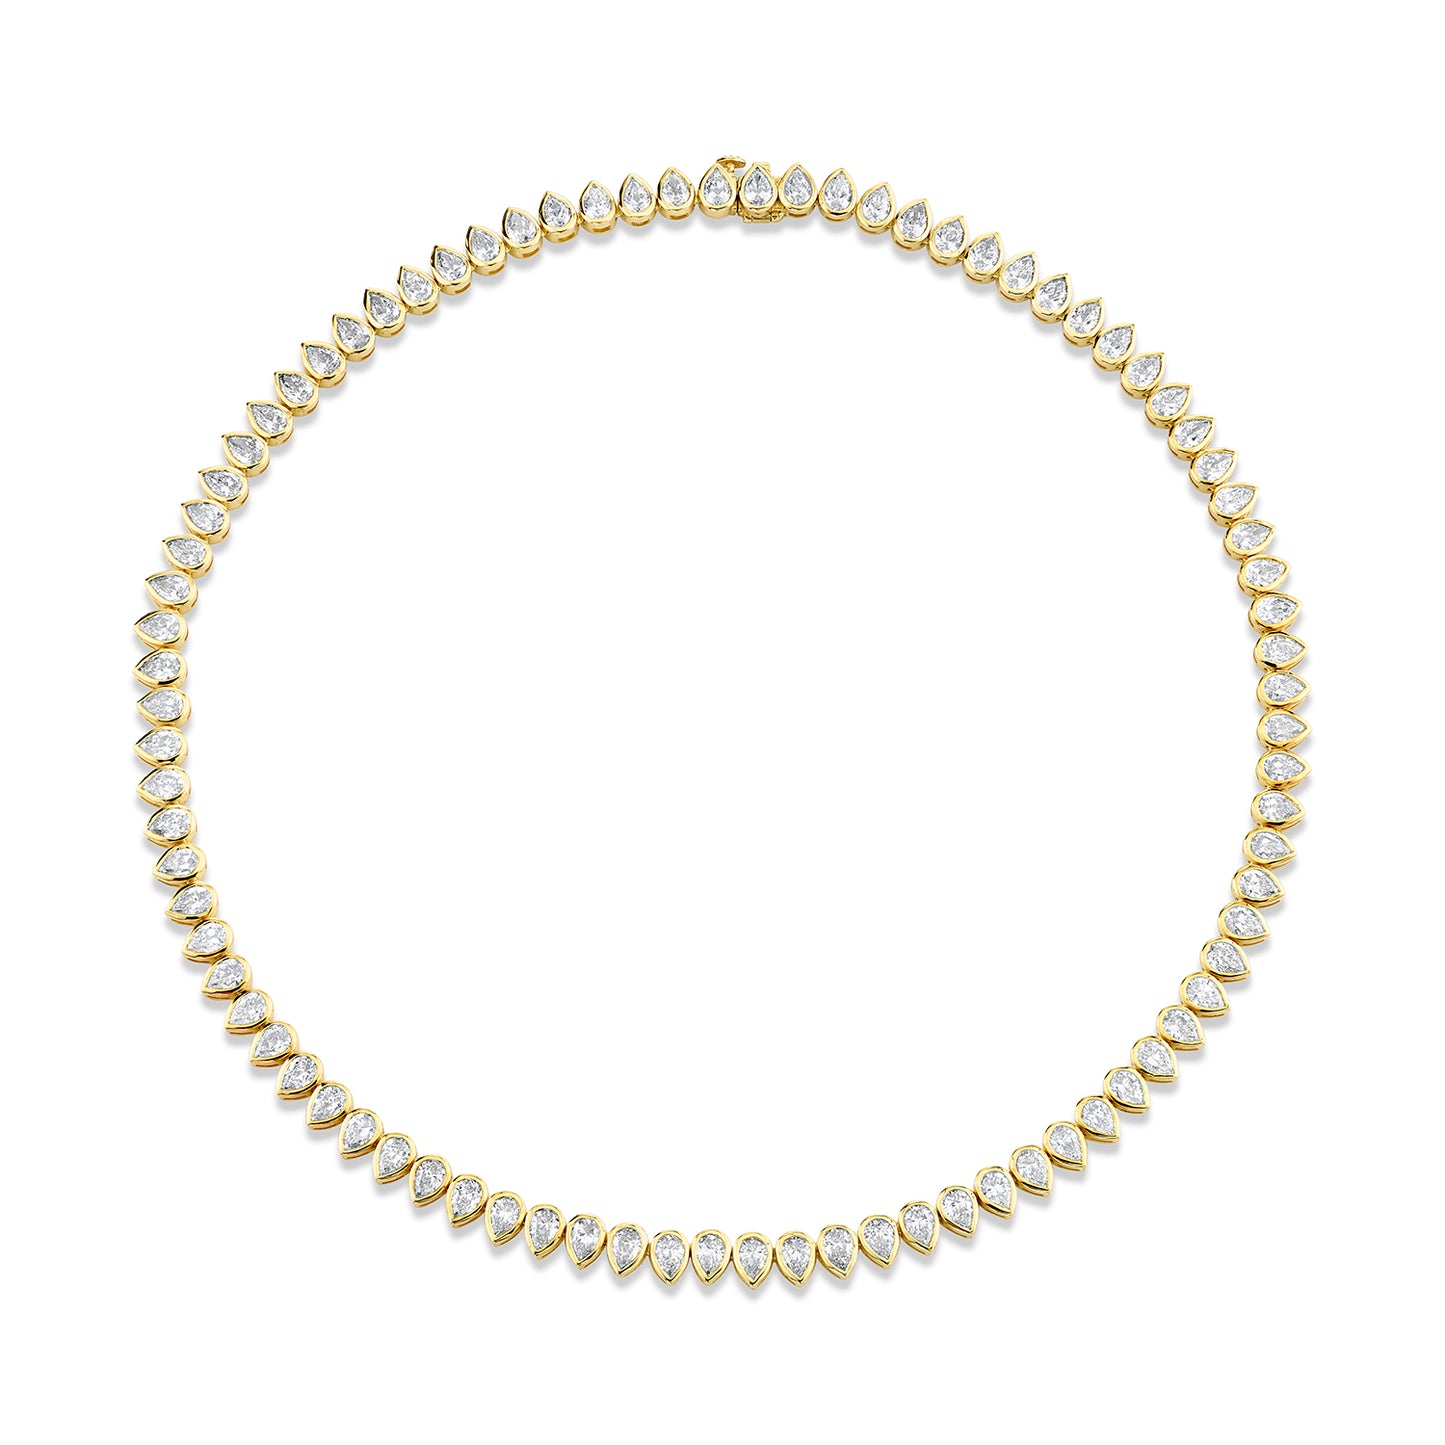 20.44 Carat 18k Yellow Gold Bezel Straight Line Necklace